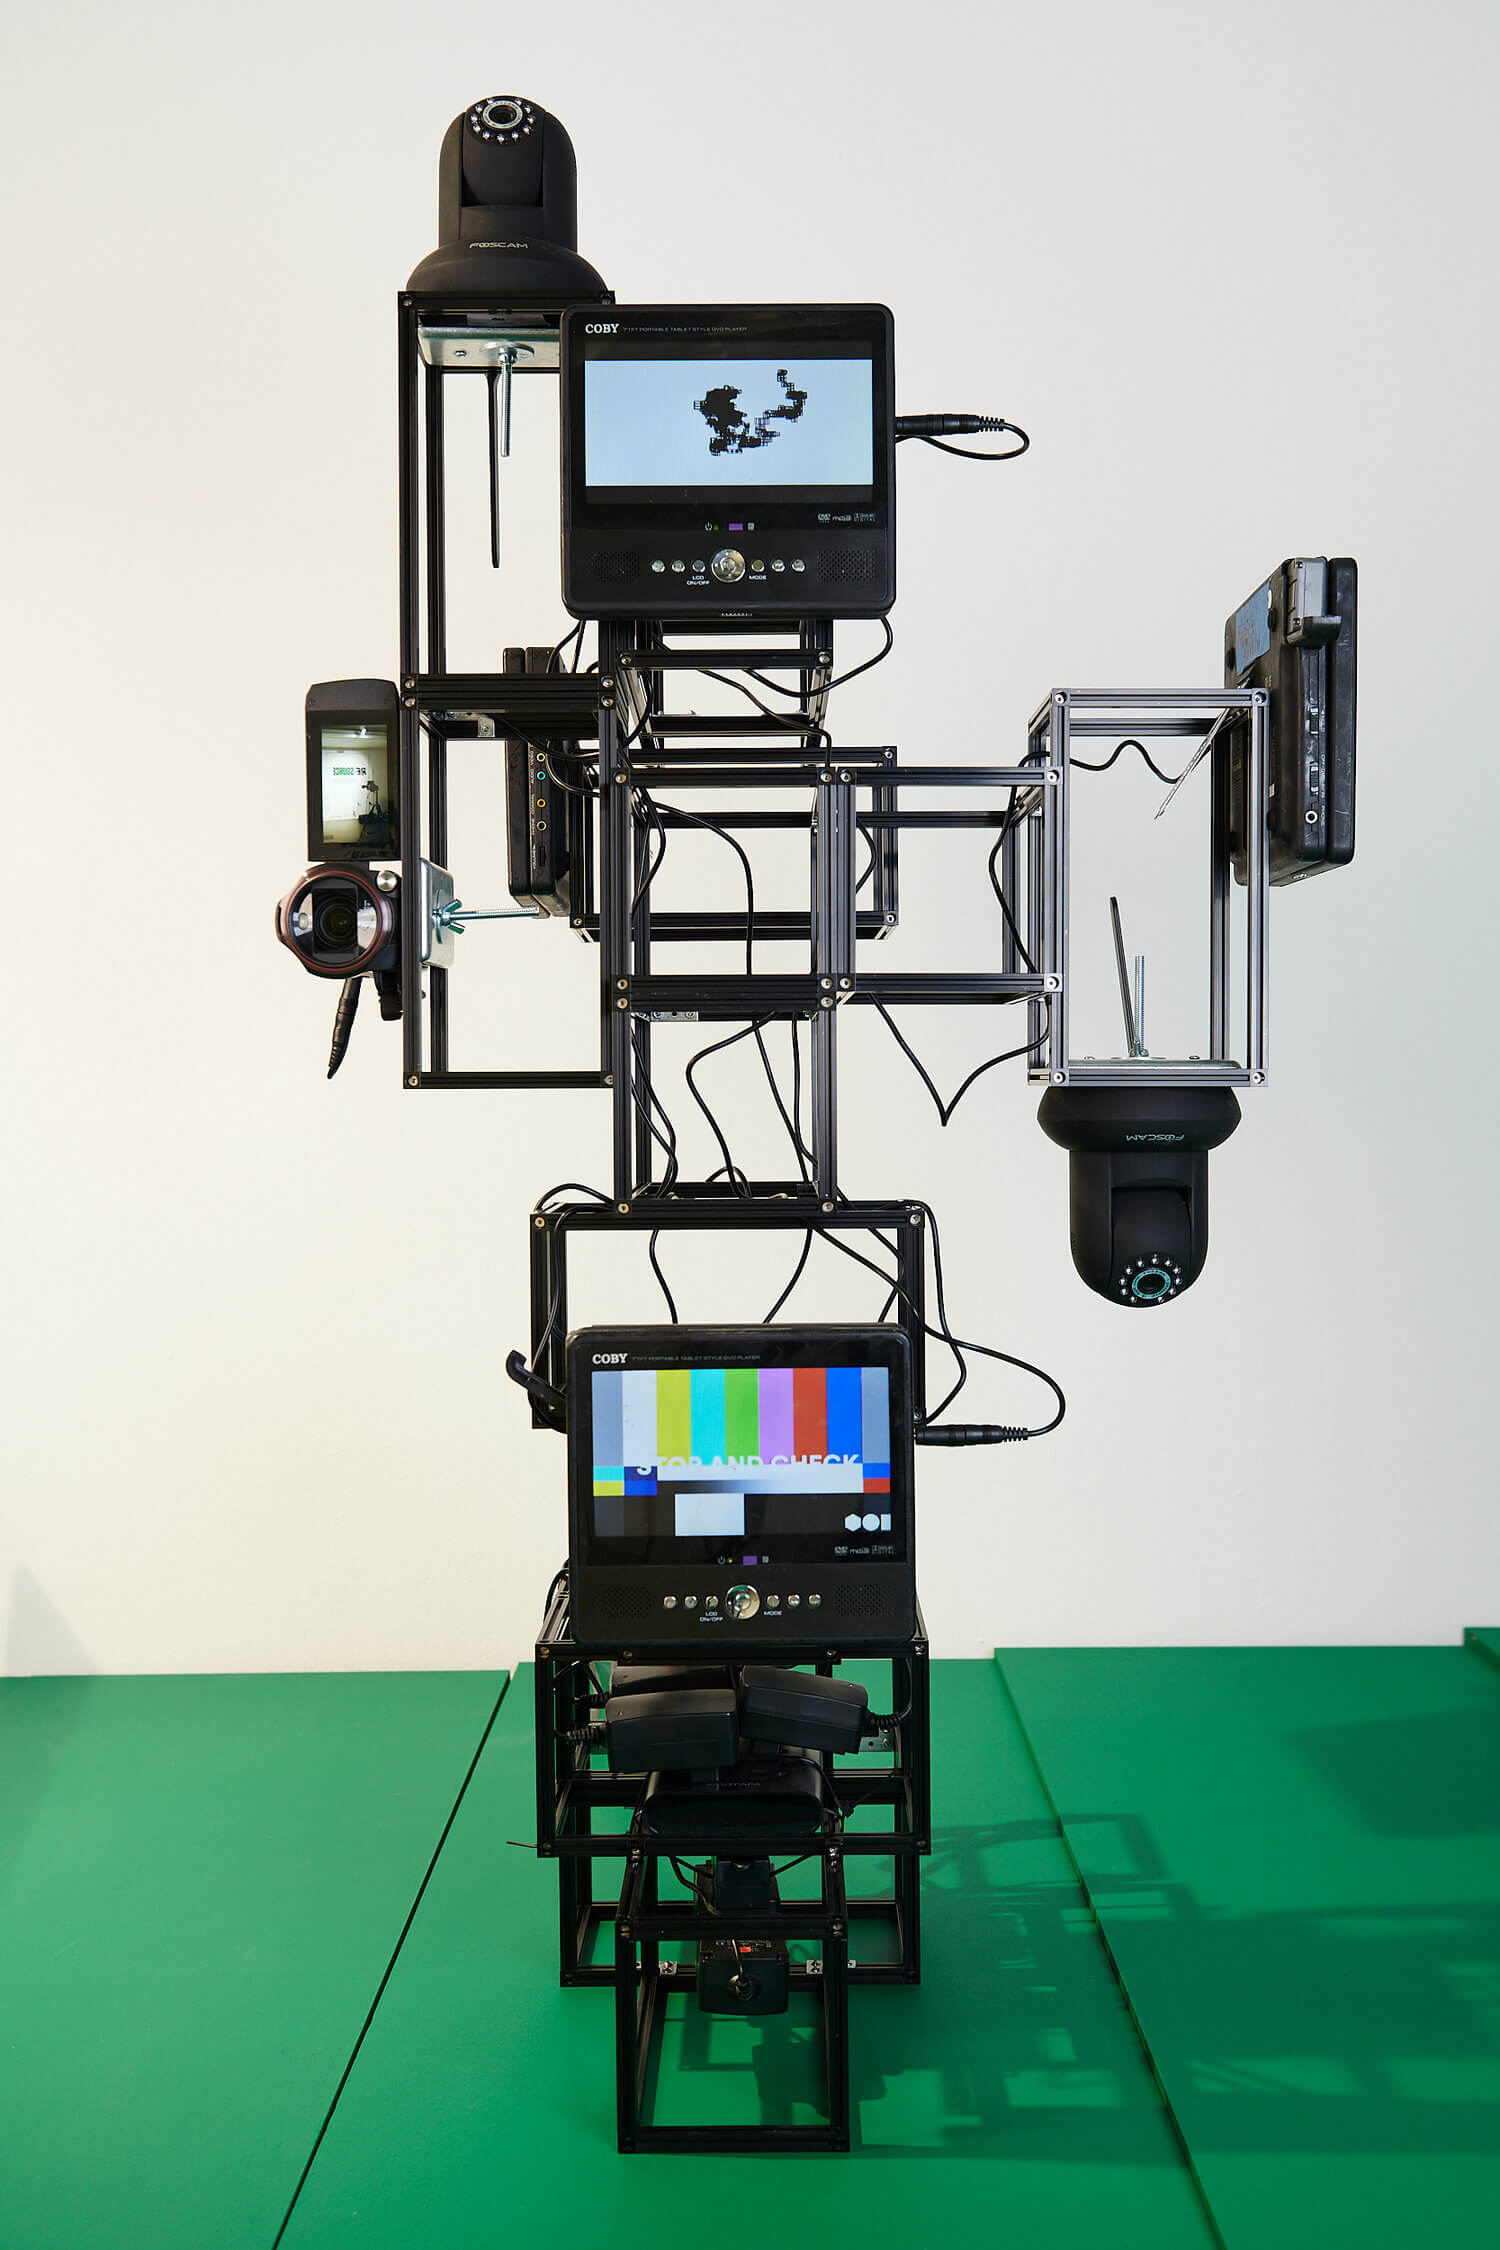 vertical camera arrangement showing screens and lenses